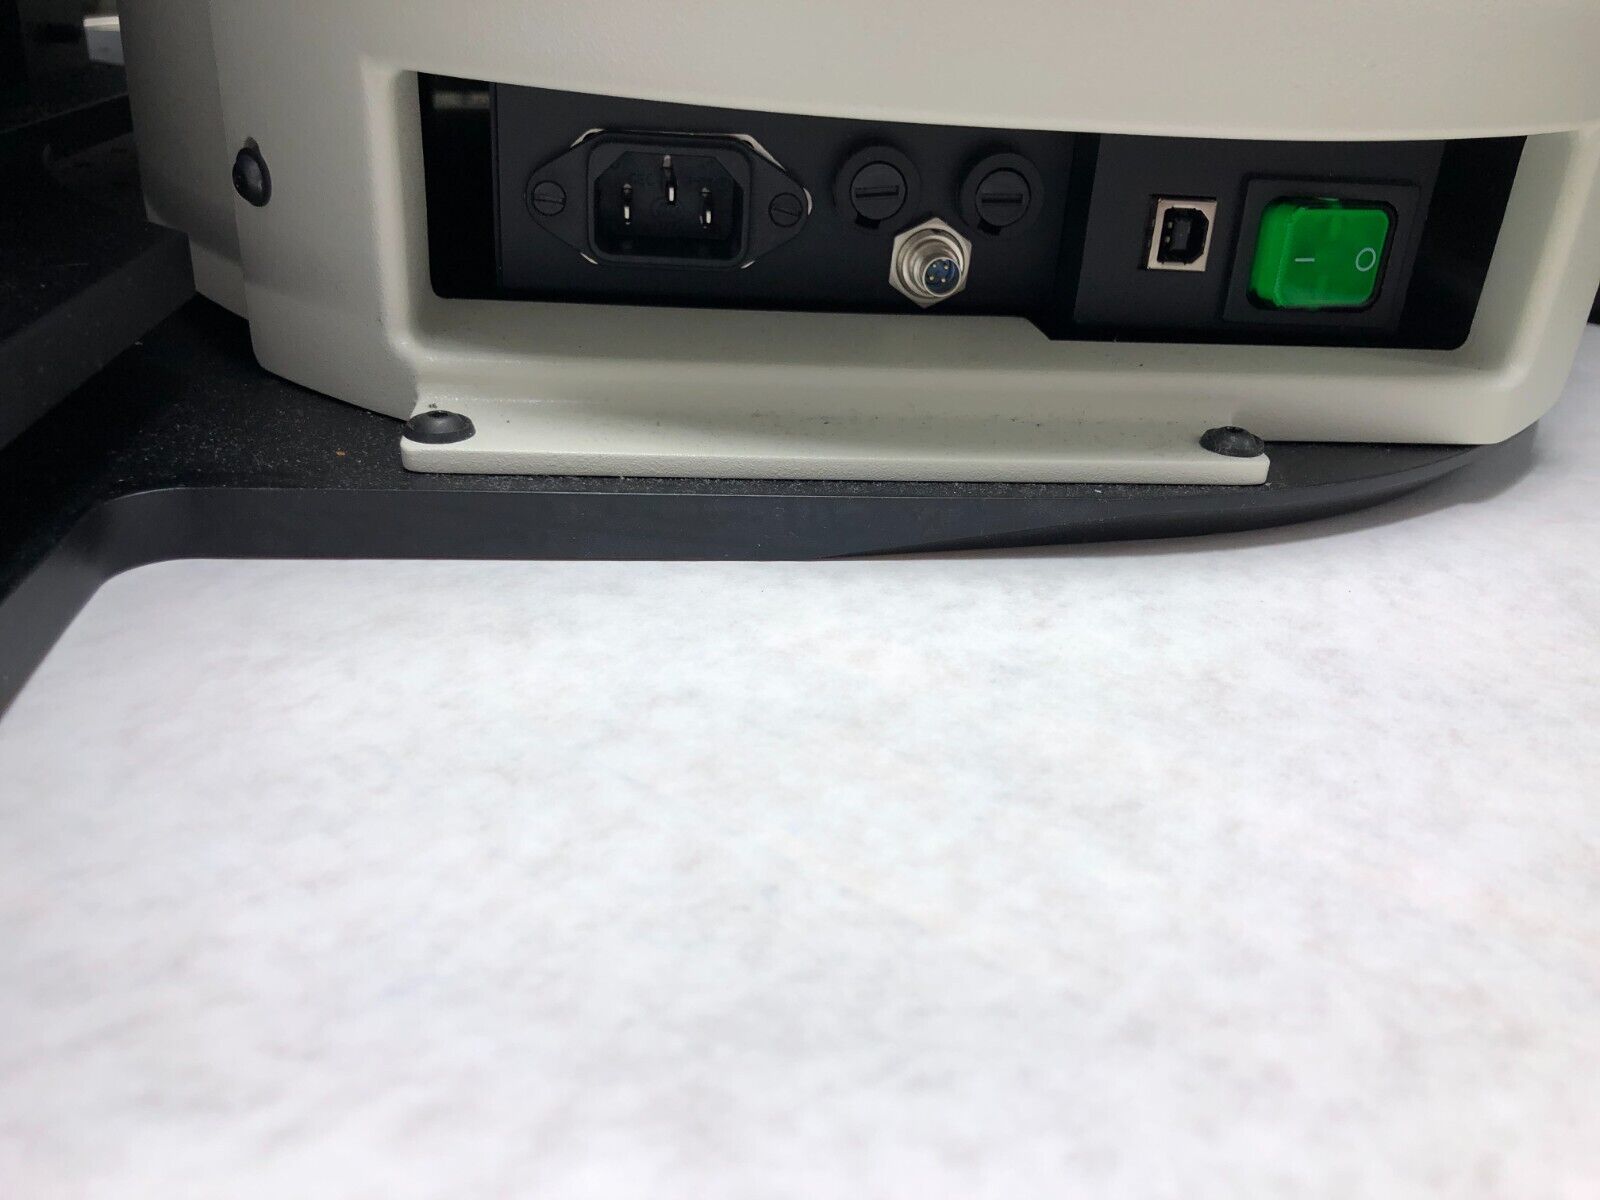 Leica Aperio Versa 200 Slide Autoload Digital Pathology Scanner Prior PL200PE/A